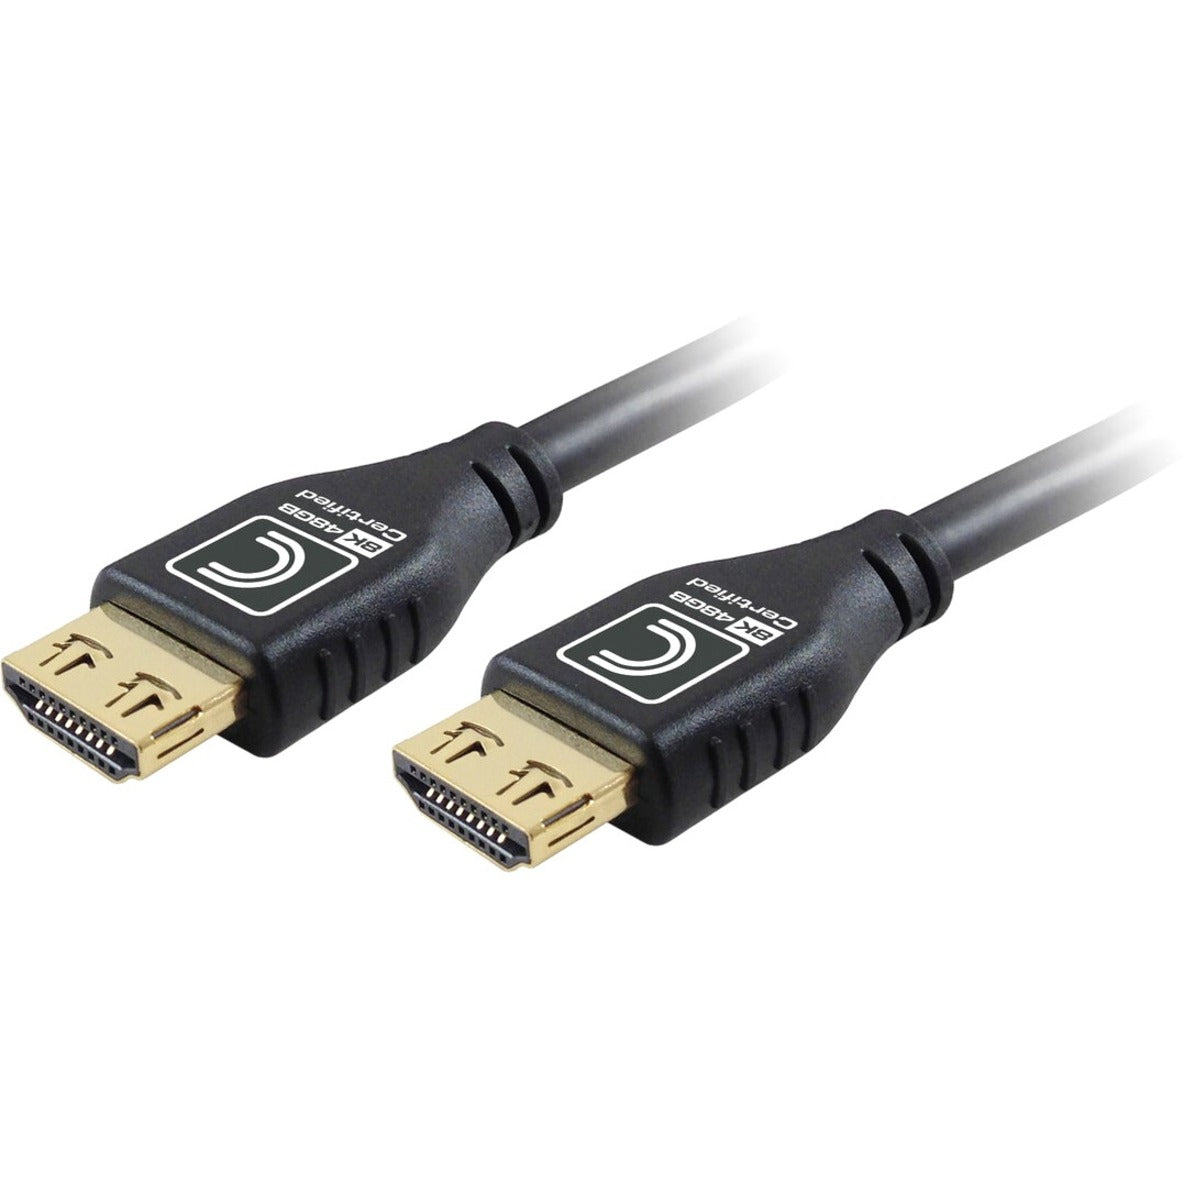 Comprehensive MHD48G-6PROBLK MicroFlex Pro AV/IT HDMI A/V Cable, 6 ft, 48 Gbit/s Data Transfer Rate, Jet Black